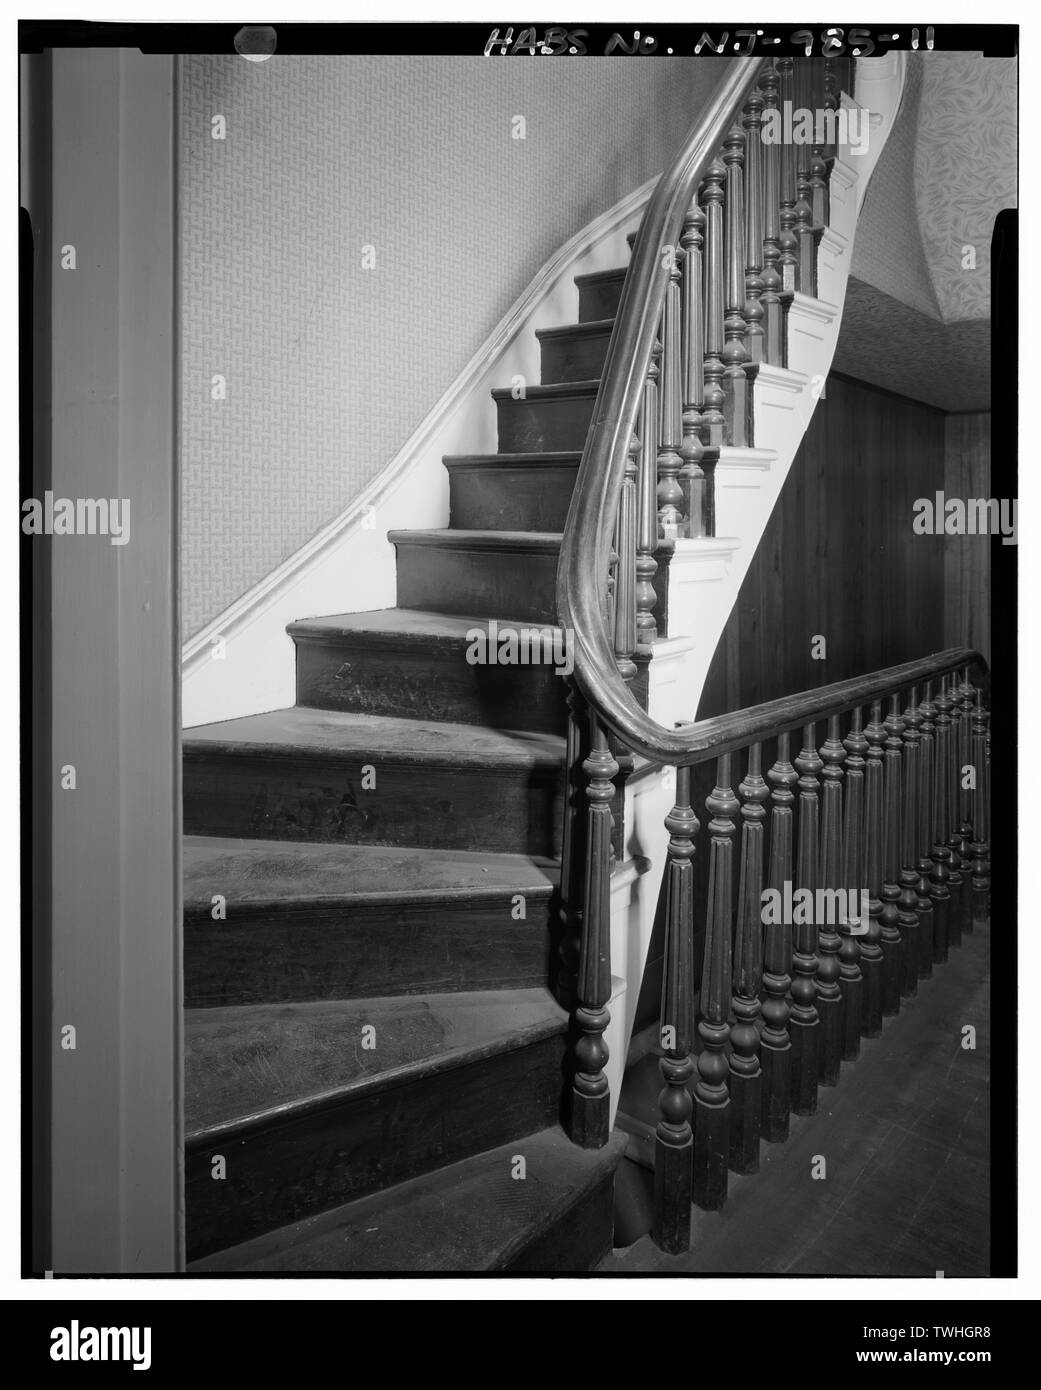 SECOND FLOOR, DETAIL OF NORTH STARIWAY TO THIRD FLOOR - Abraham S. Ackley House, 406 Cooper Street, Camden, Camden County, NJ Stock Photo